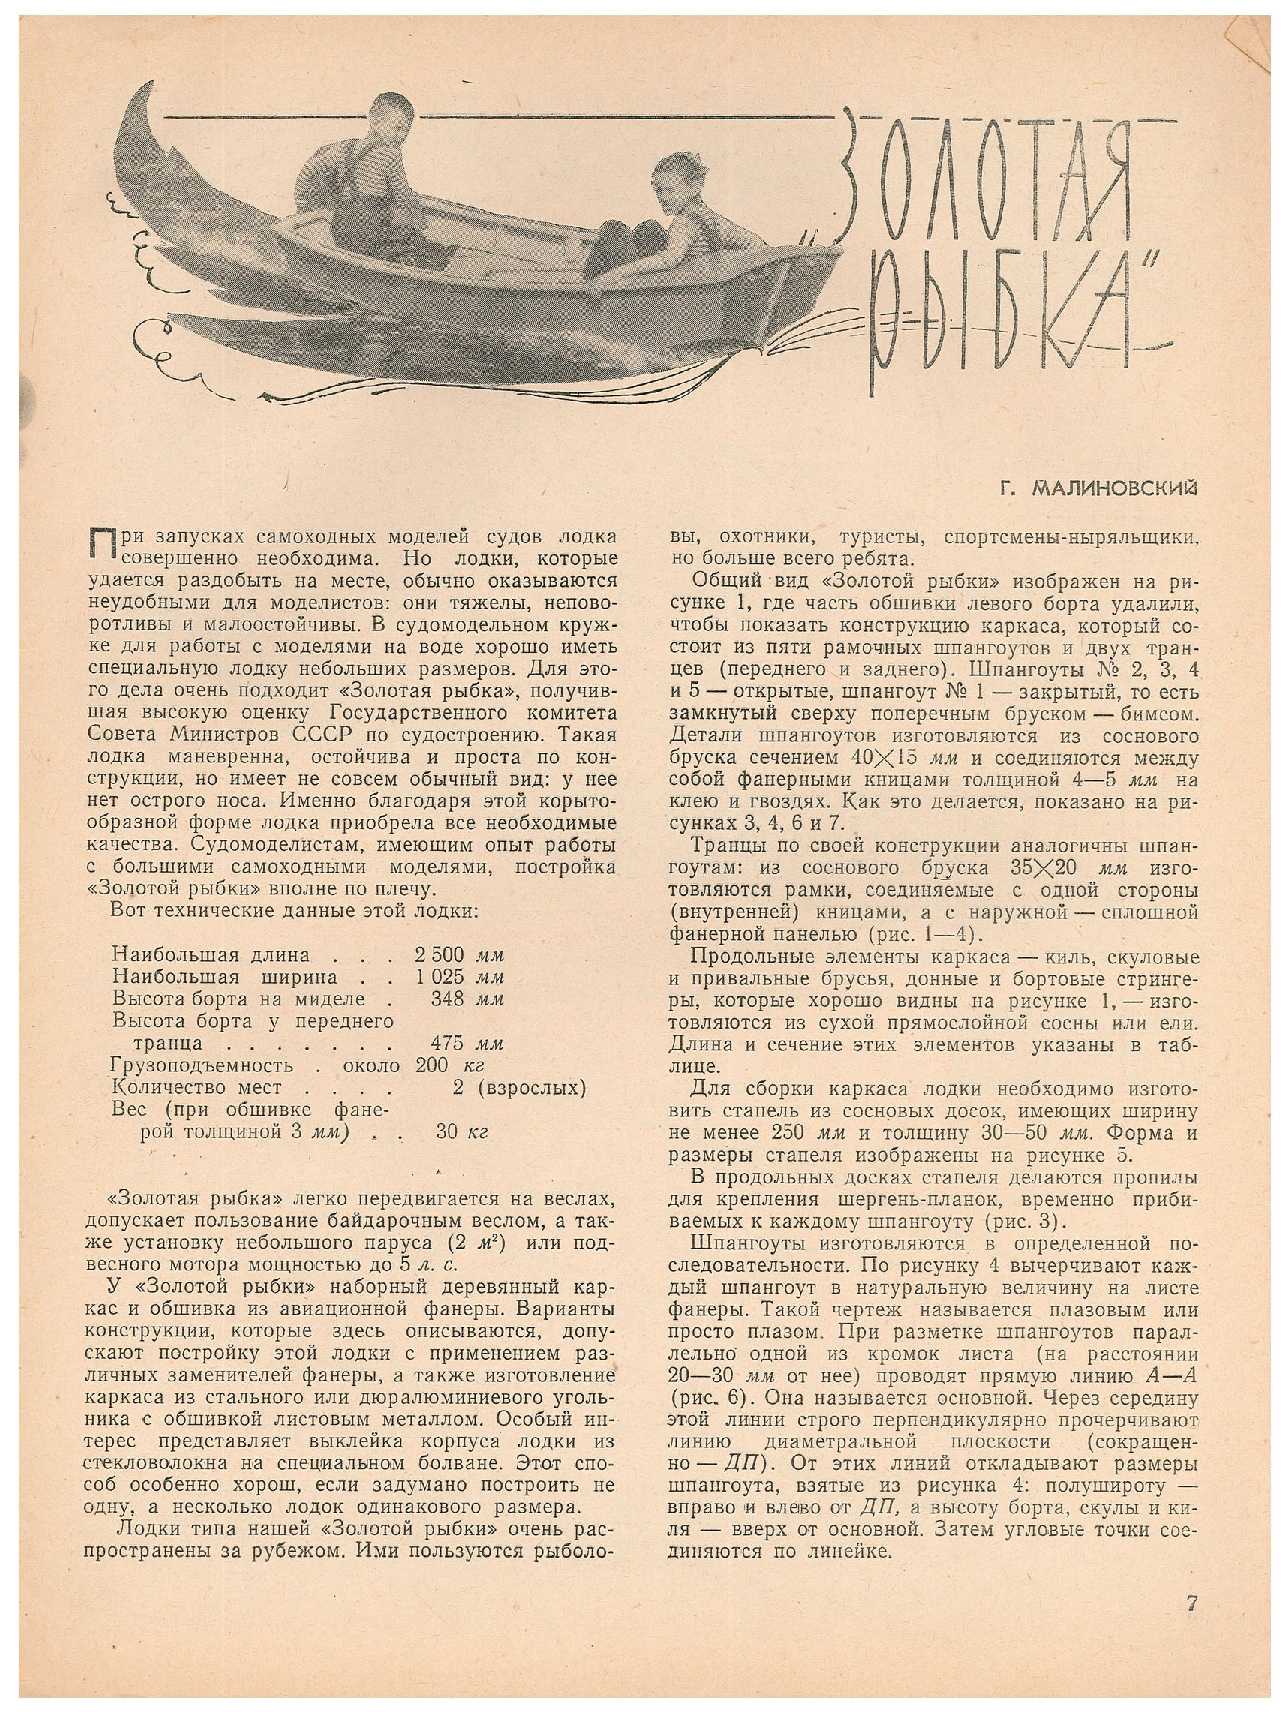 ЮМК 3, 1962, 7 c.